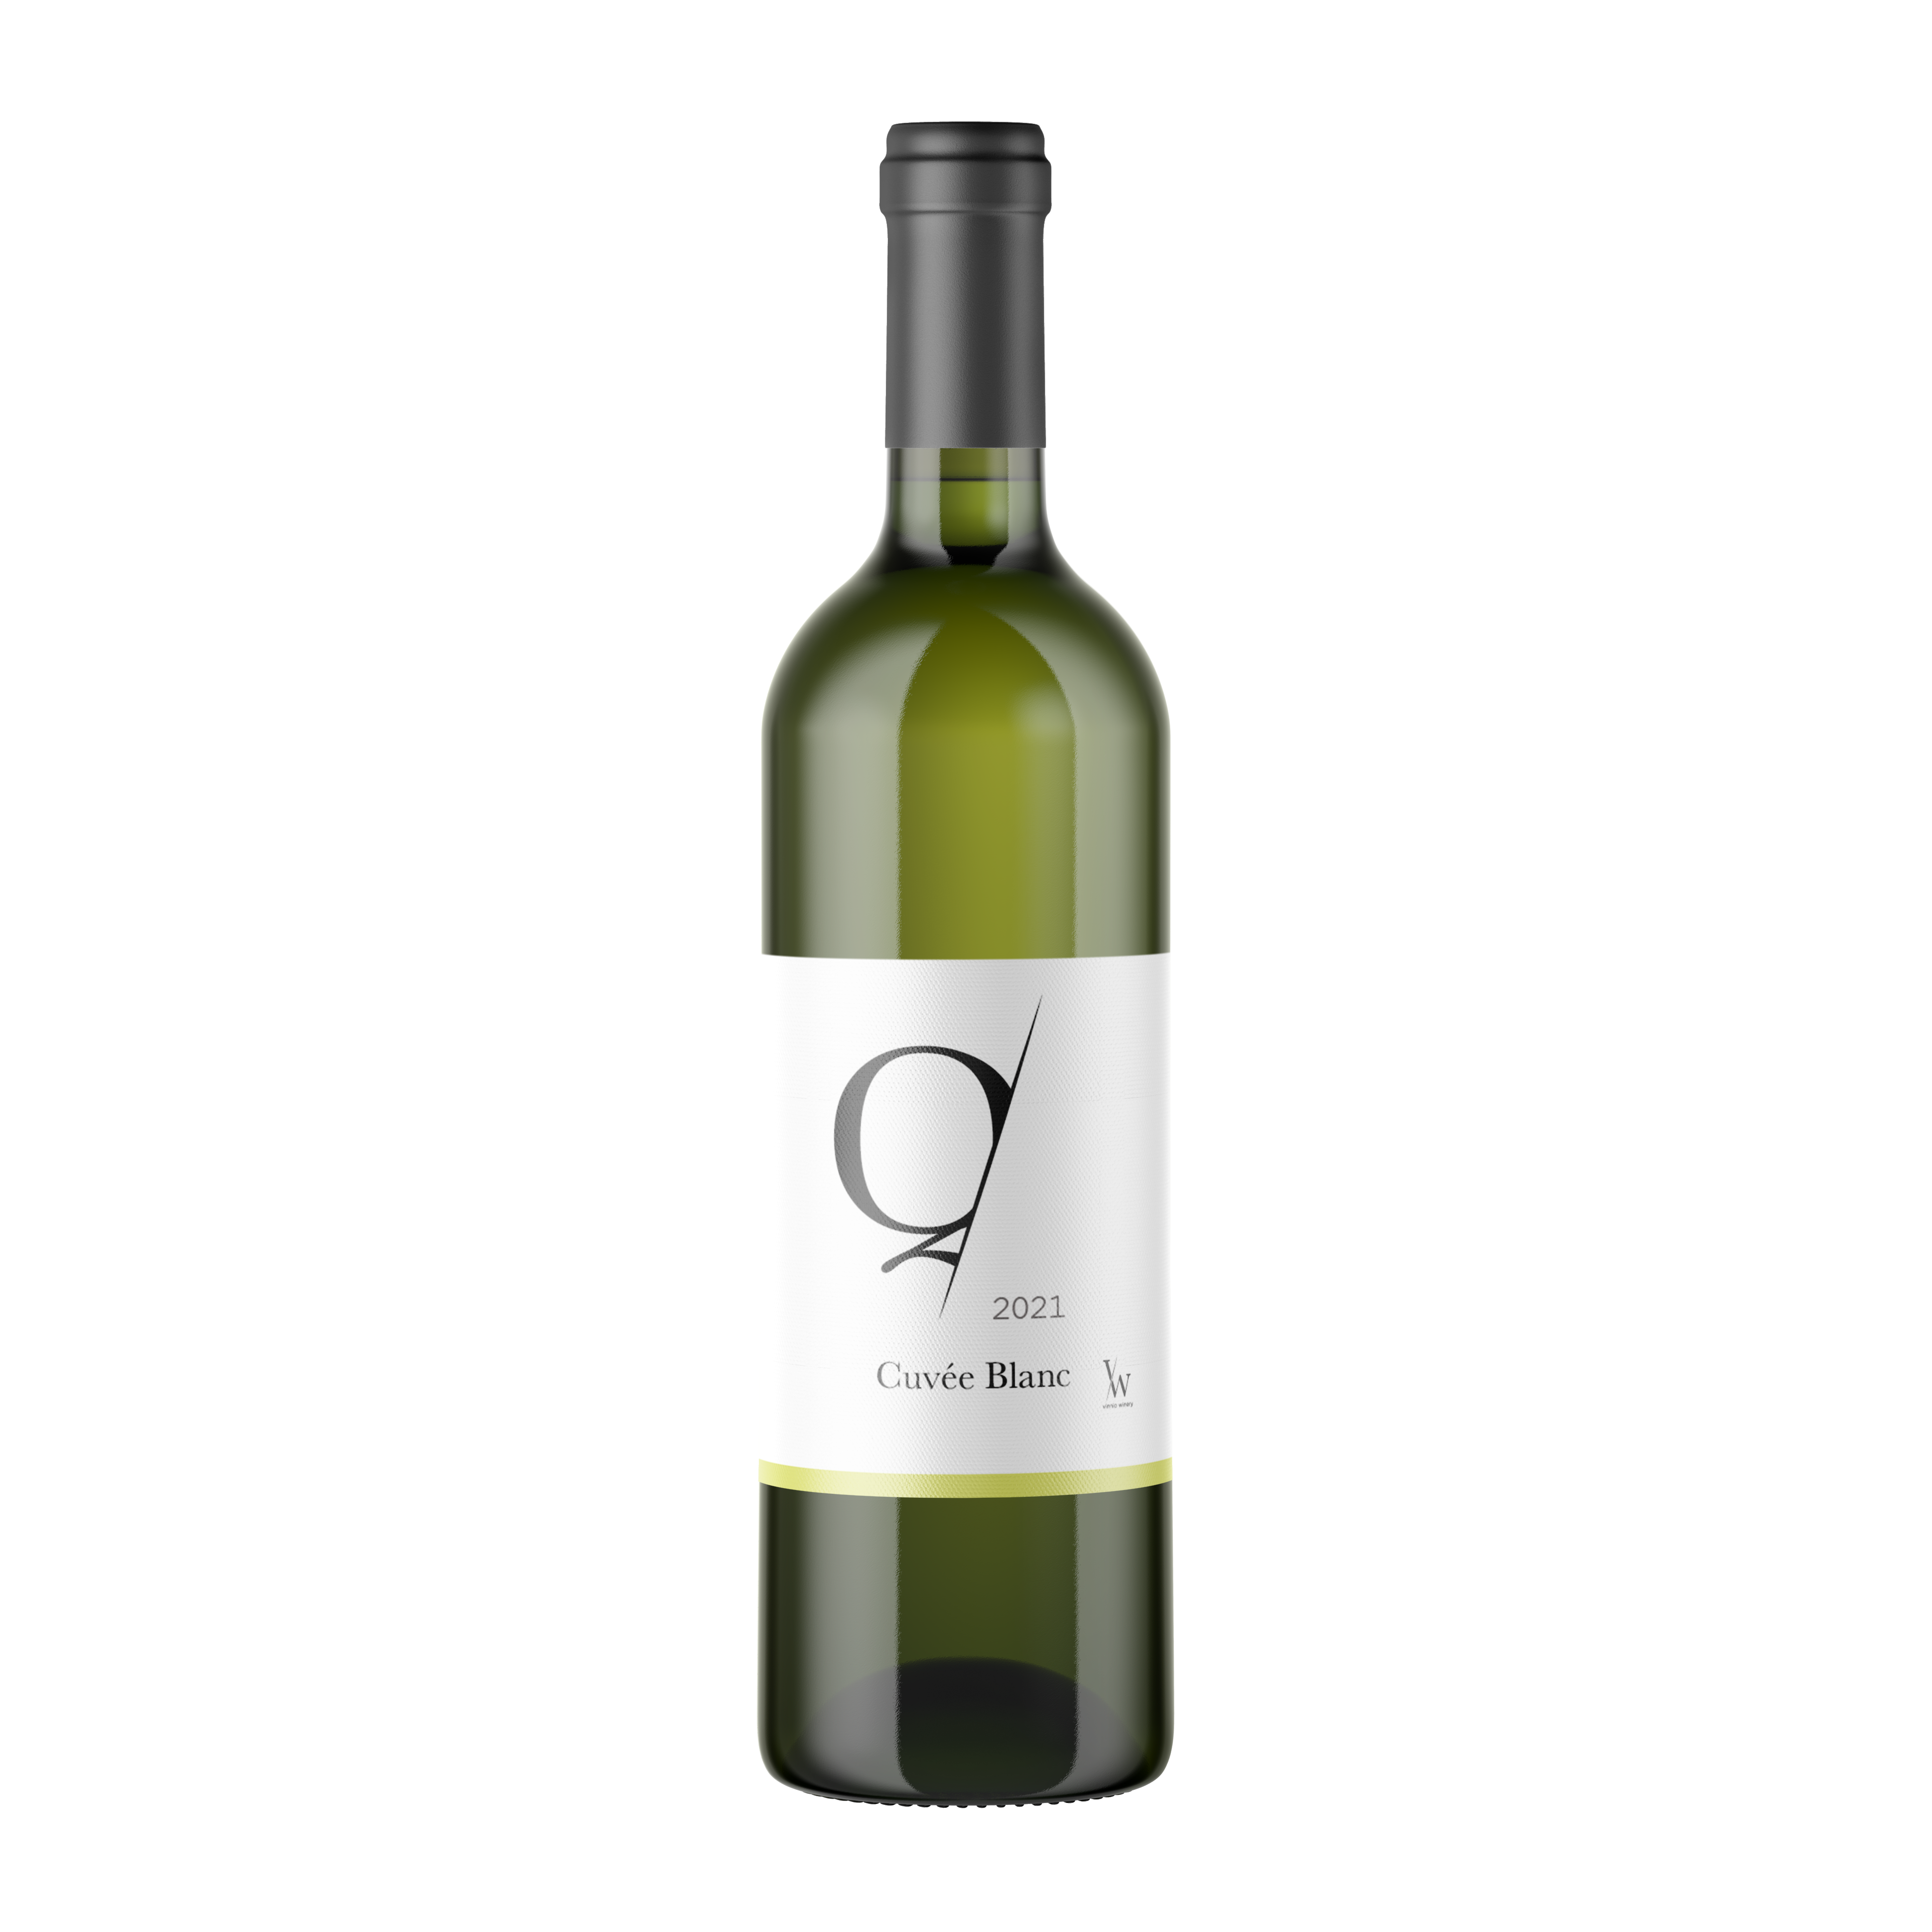 Vinnio Winery - Cuvée Blanc 2021